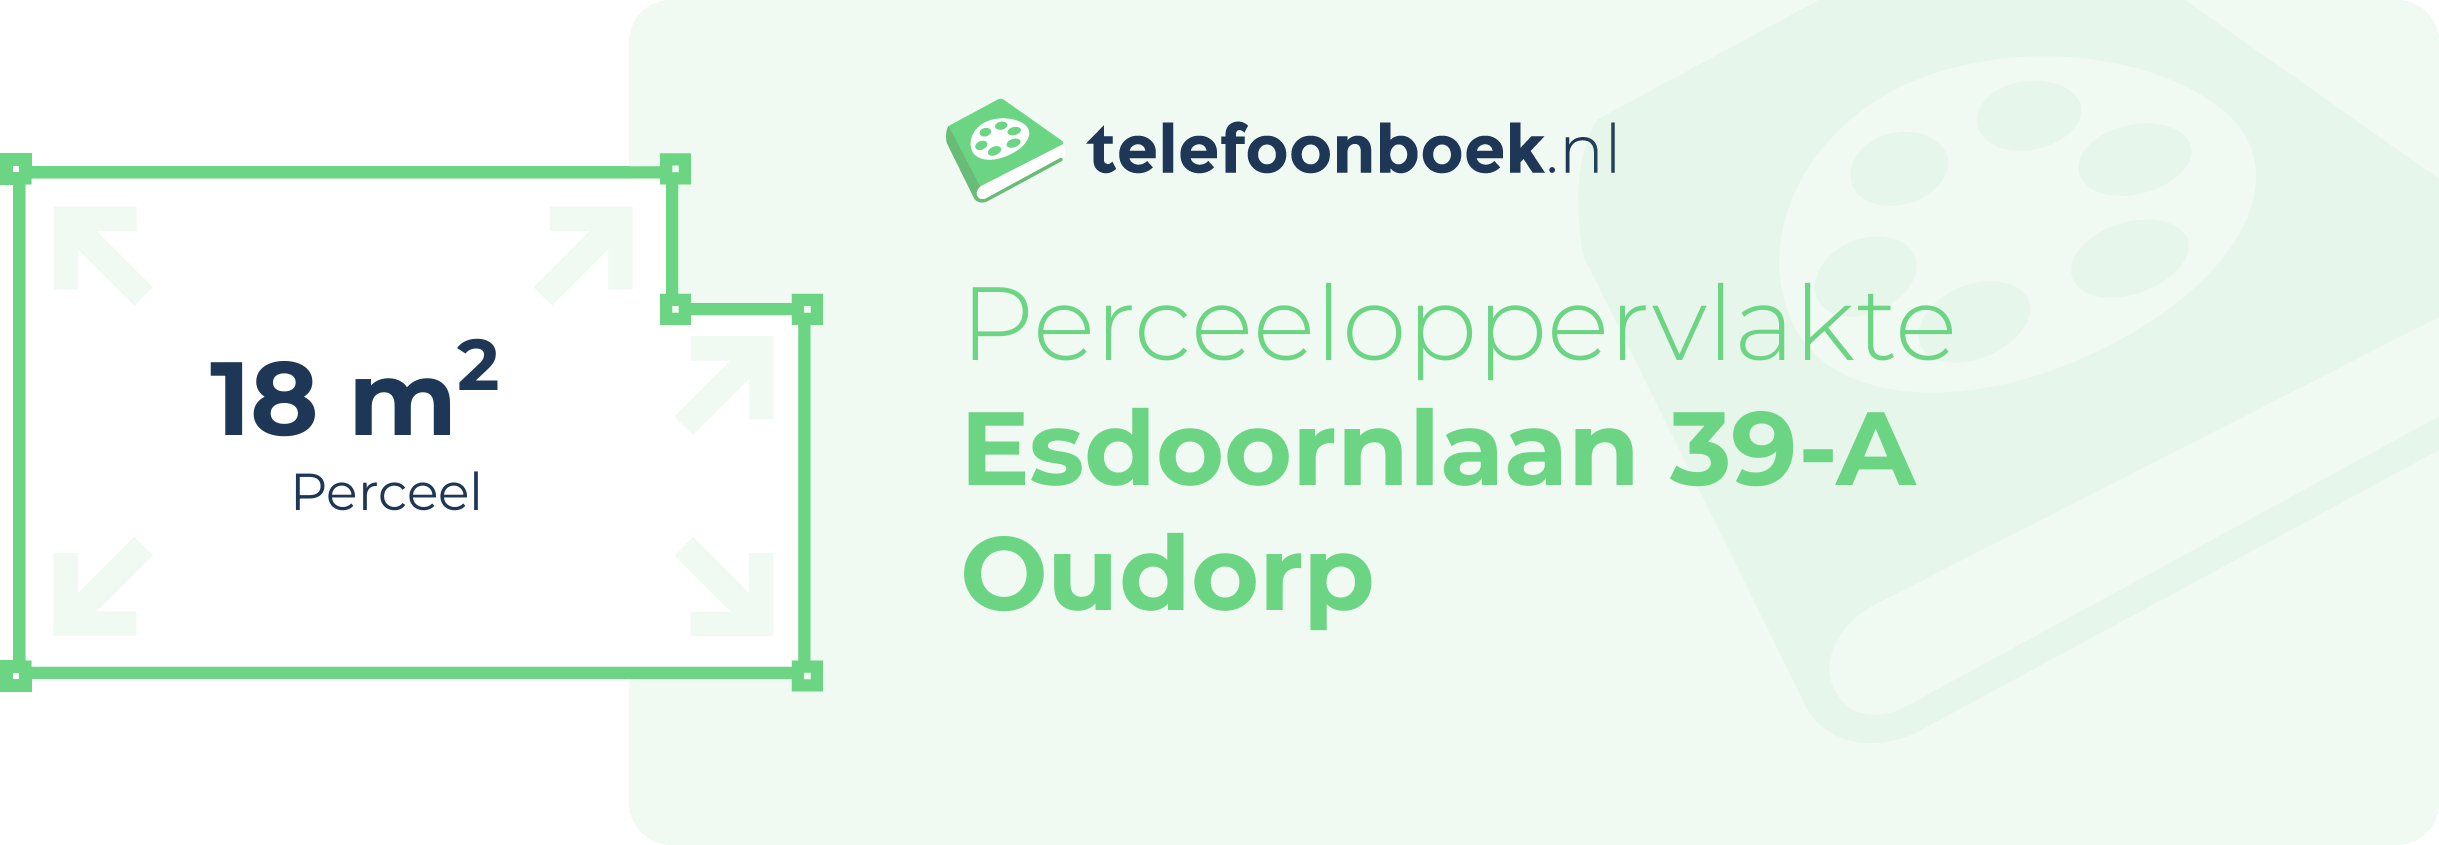 Perceeloppervlakte Esdoornlaan 39-A Oudorp